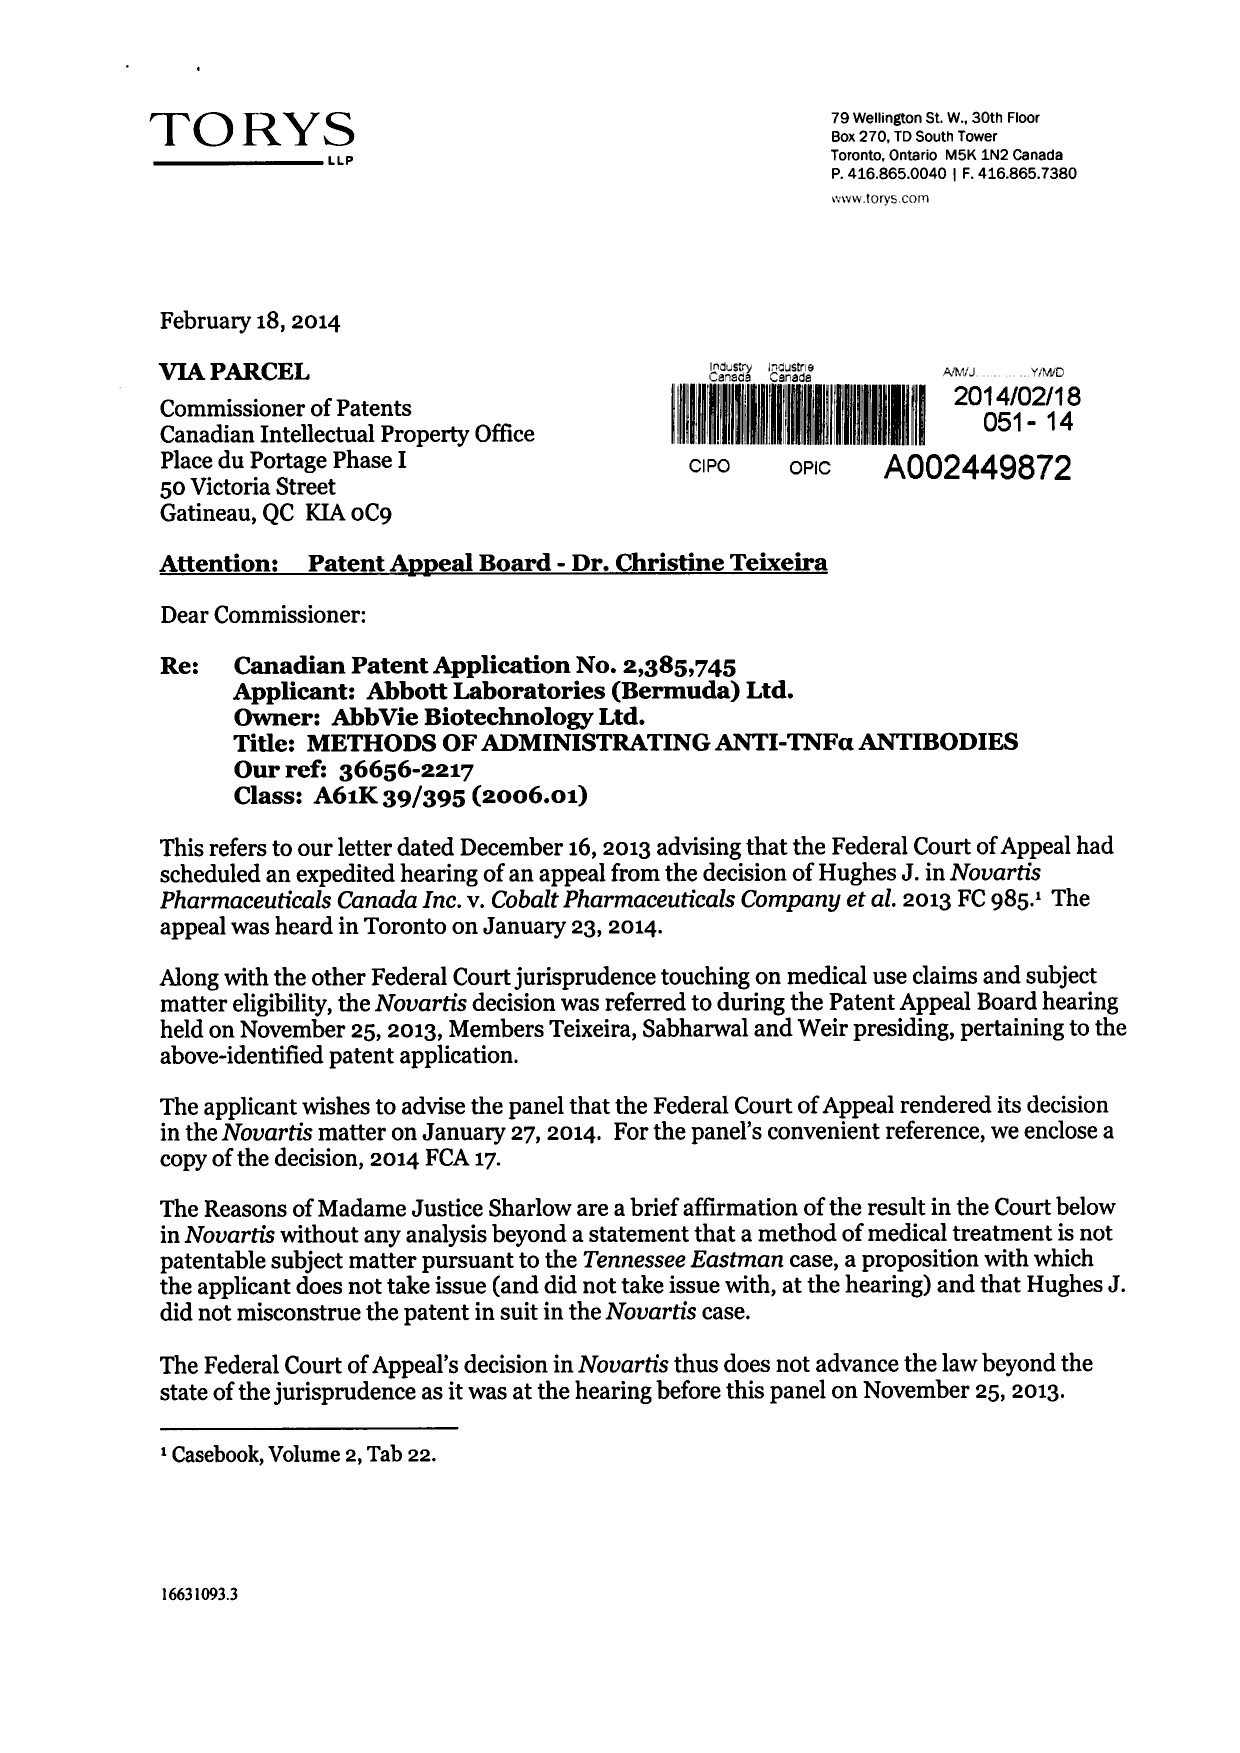 Canadian Patent Document 2385745. Prosecution-Amendment 20131218. Image 1 of 6